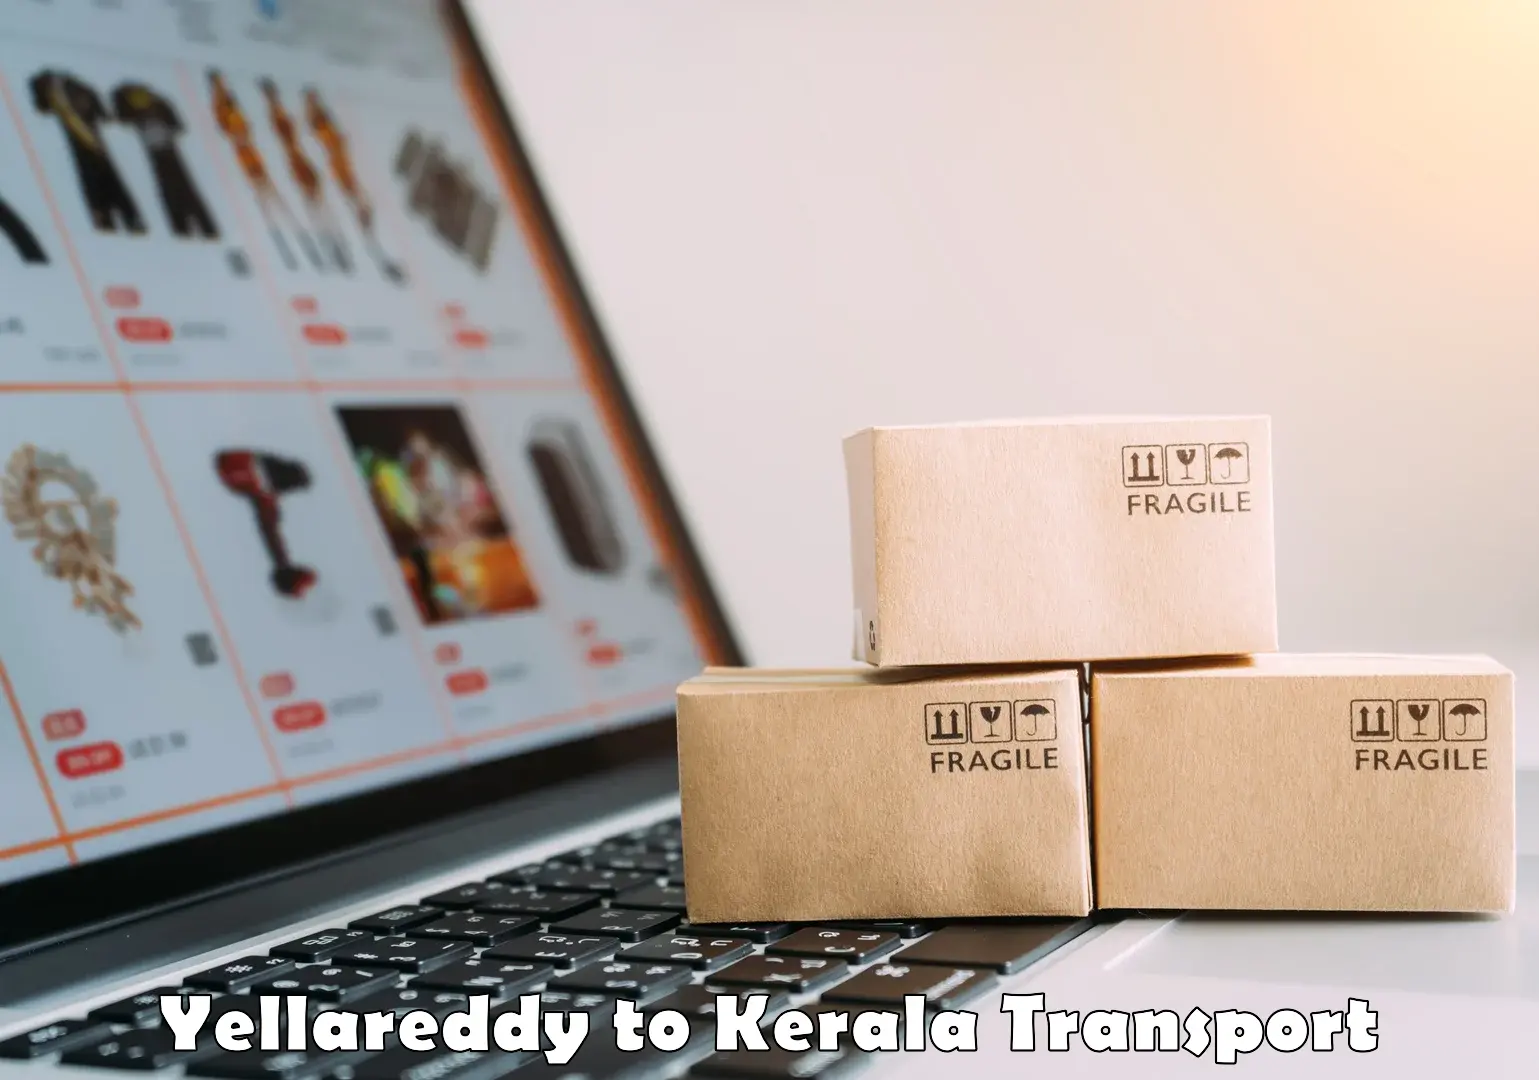 Daily transport service Yellareddy to Attingal